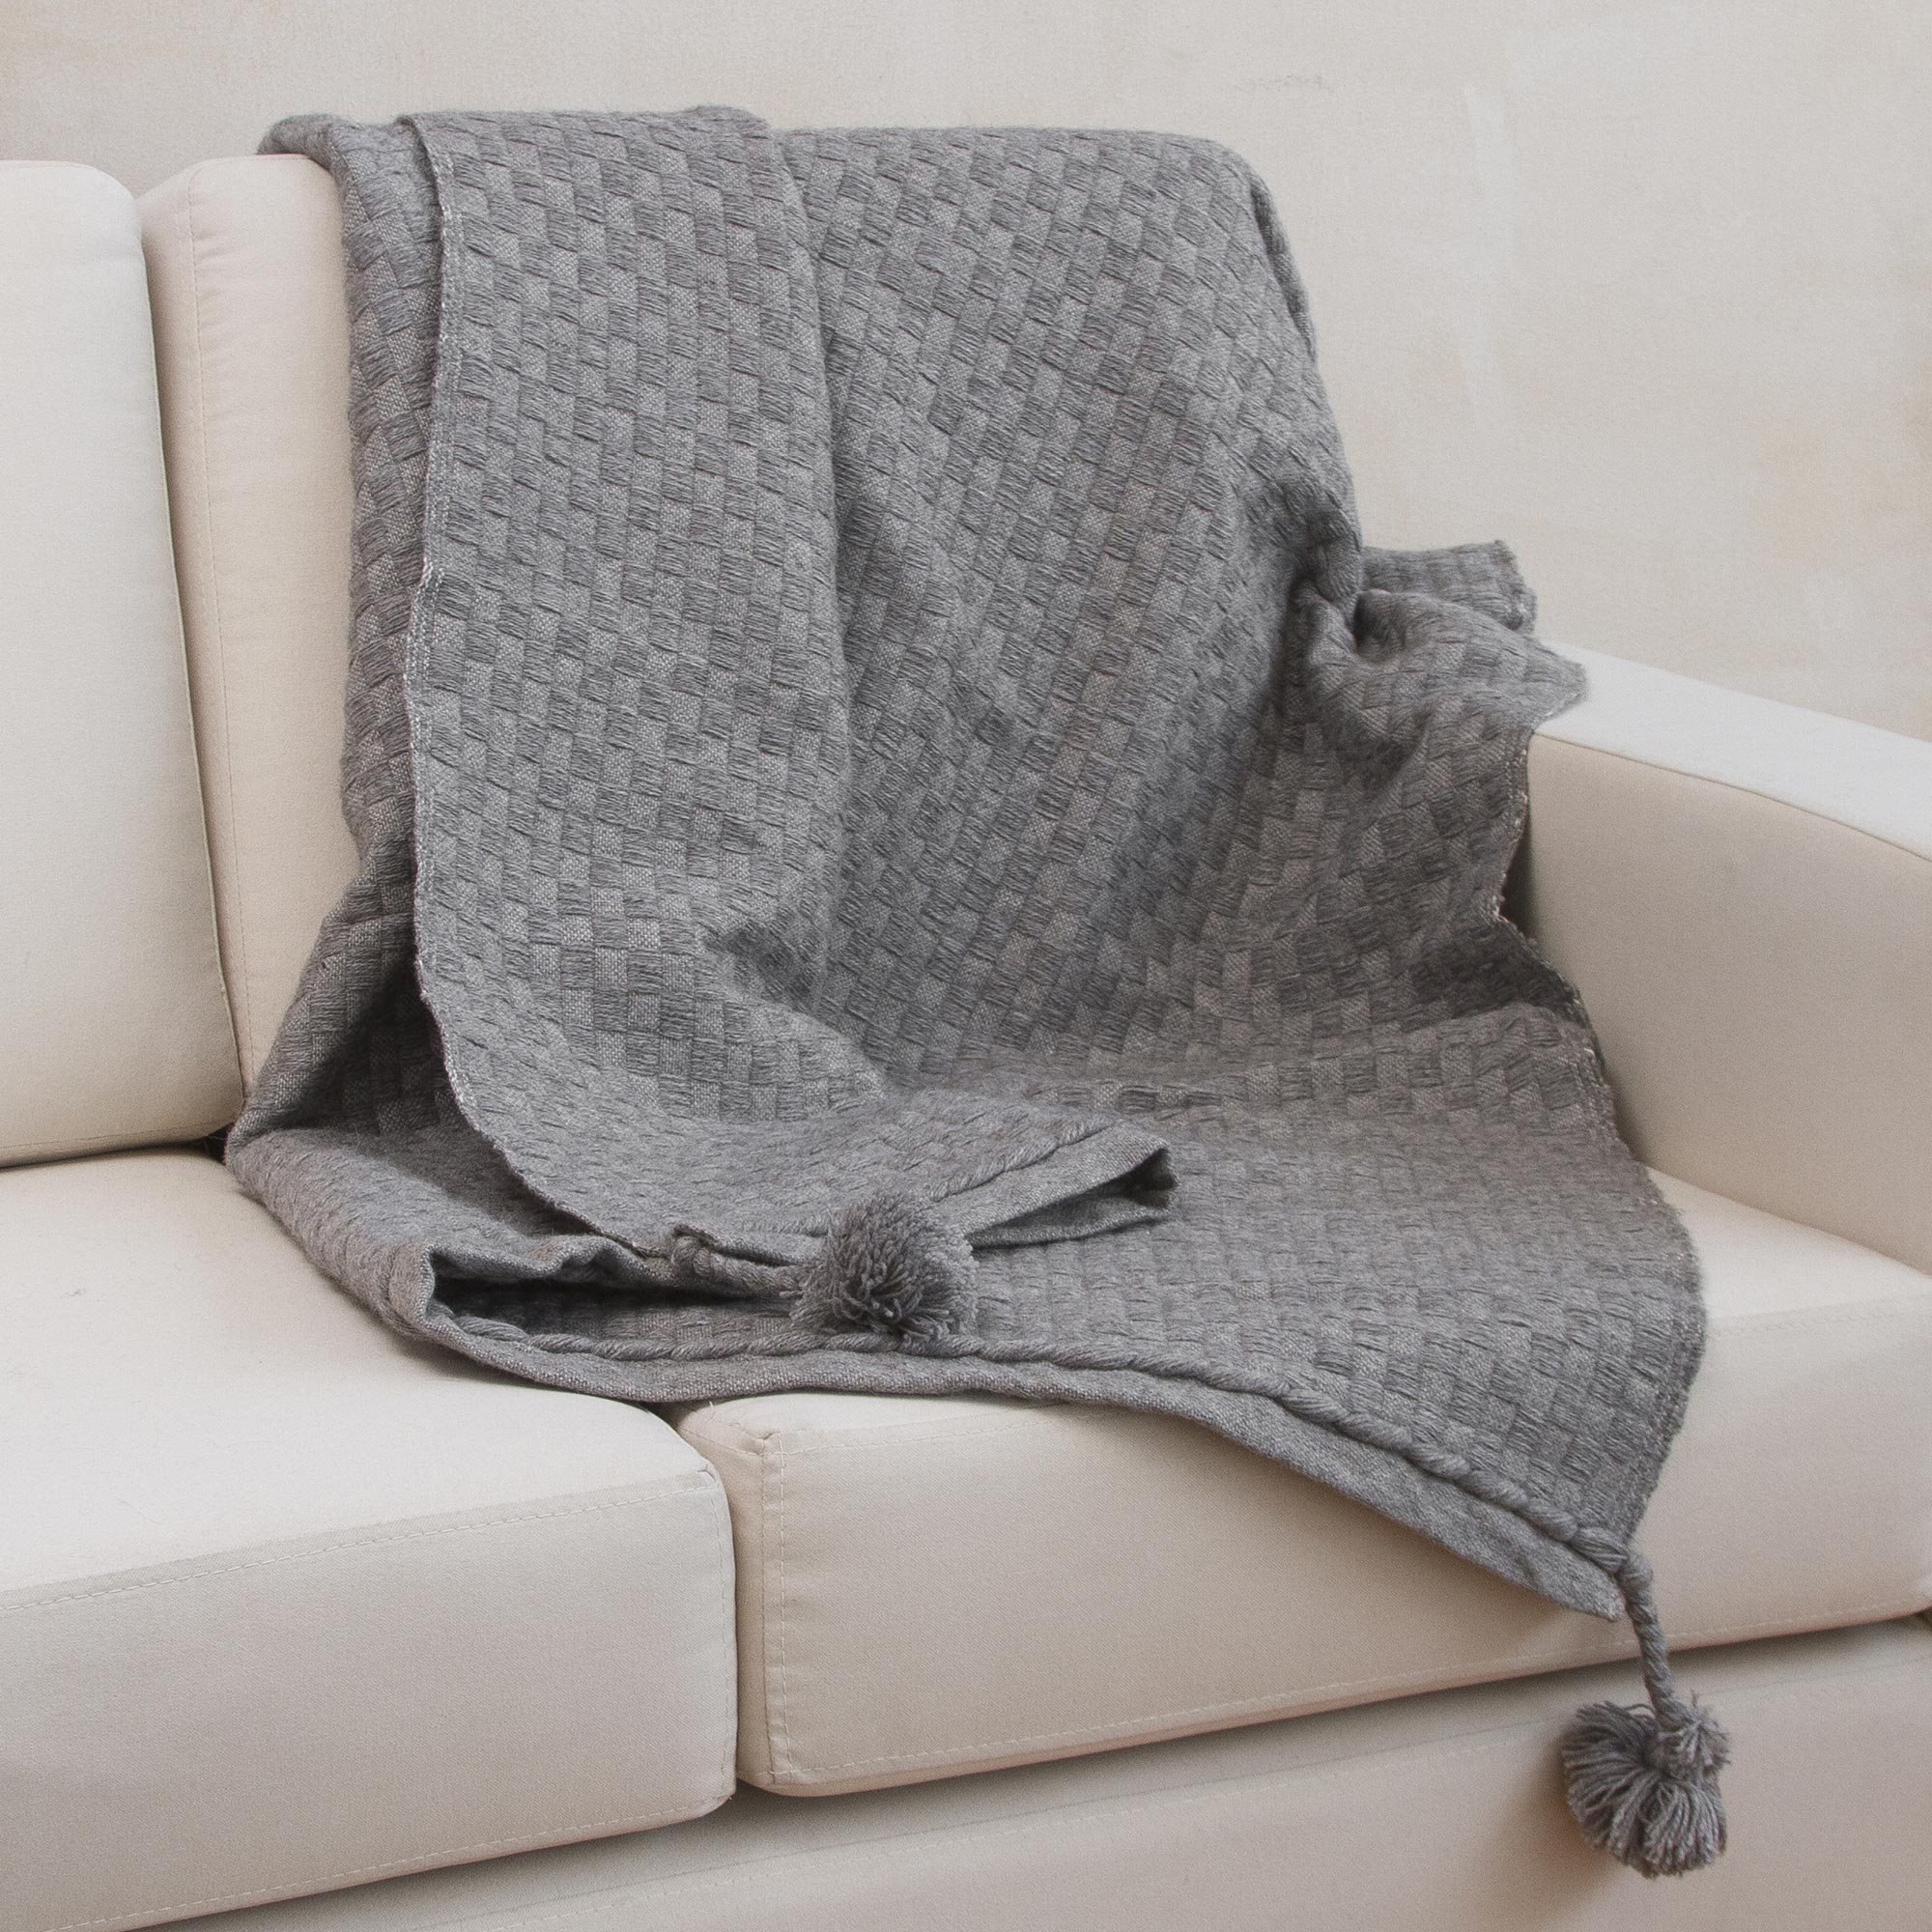 Neutral Grey Soft Alpaca Blend Throw Blanket with Tassels